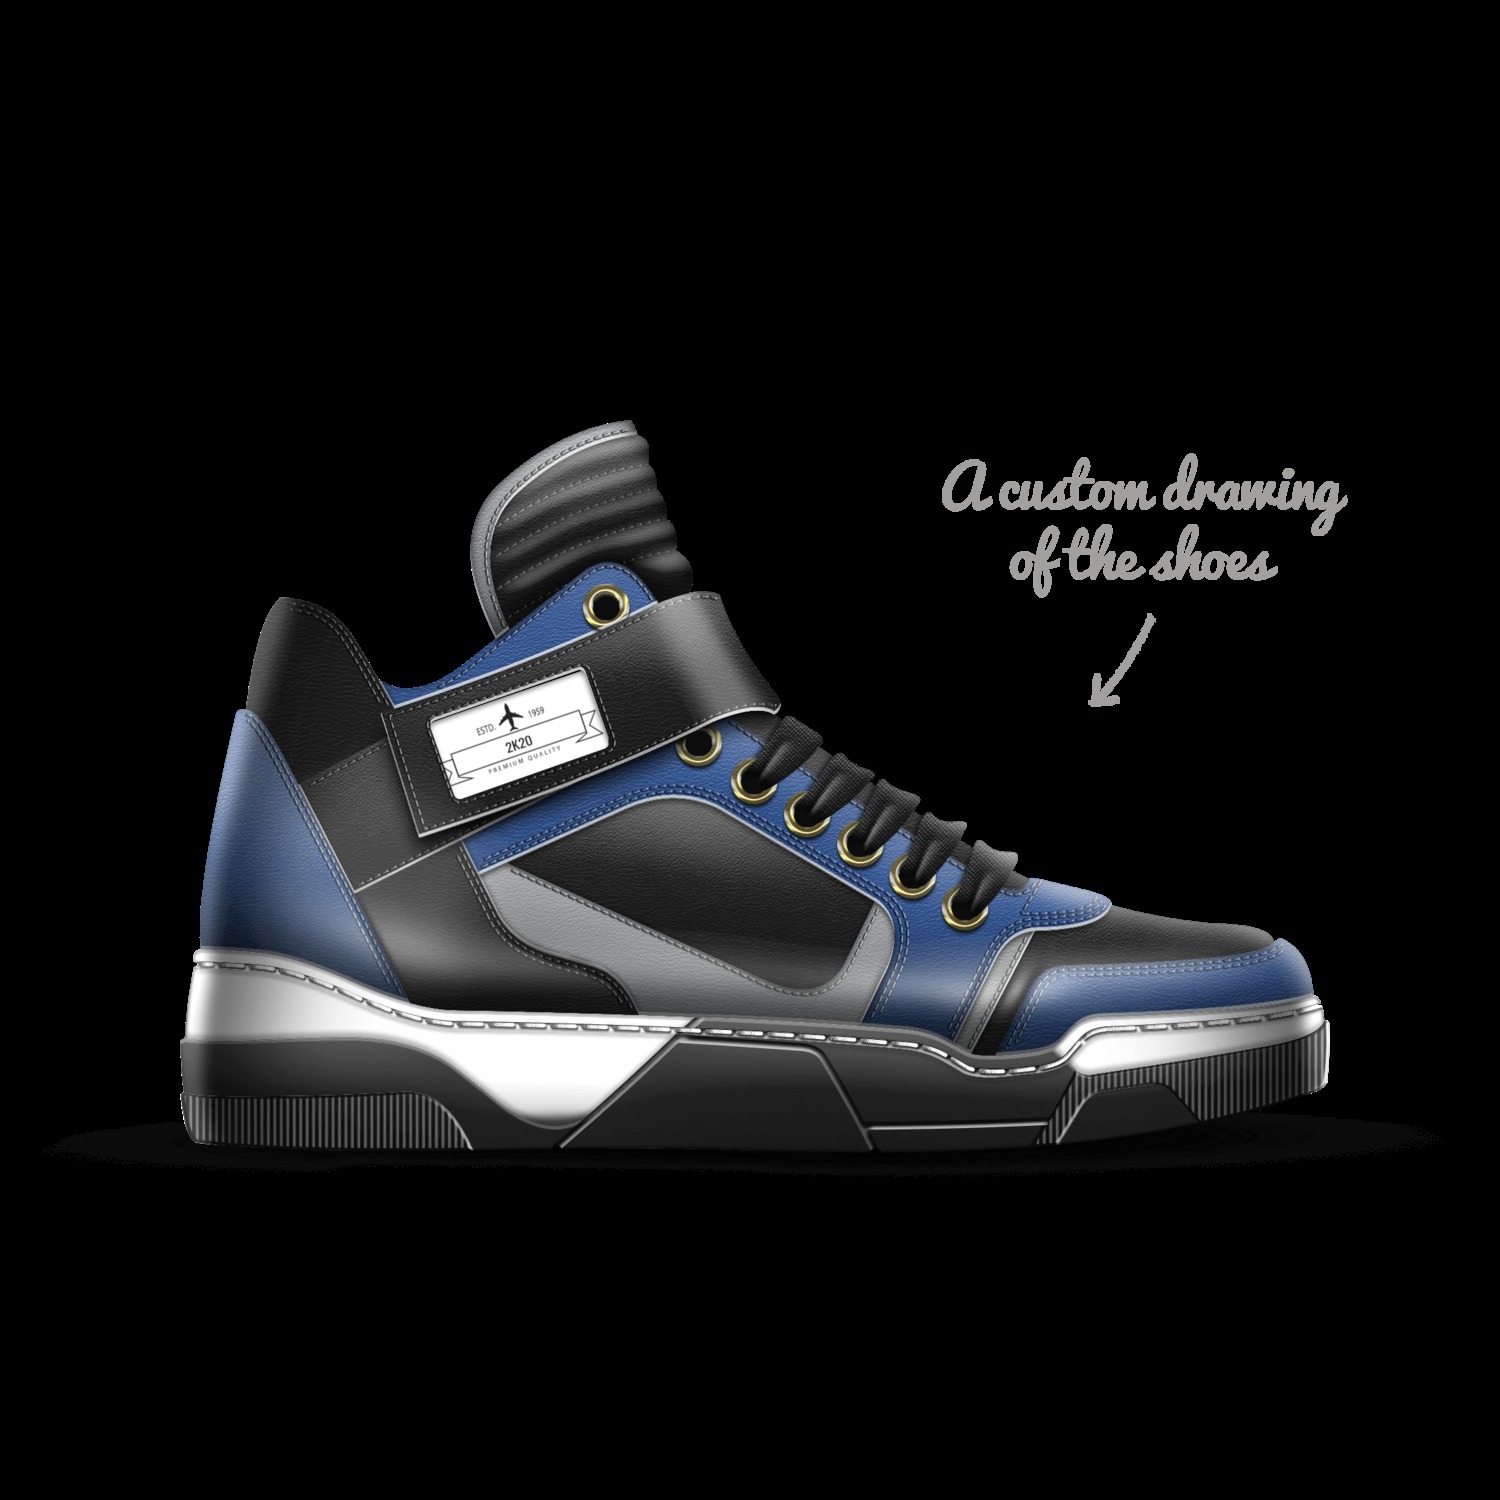 A Custom Shoe concept by Alonzo Bazemore Sr